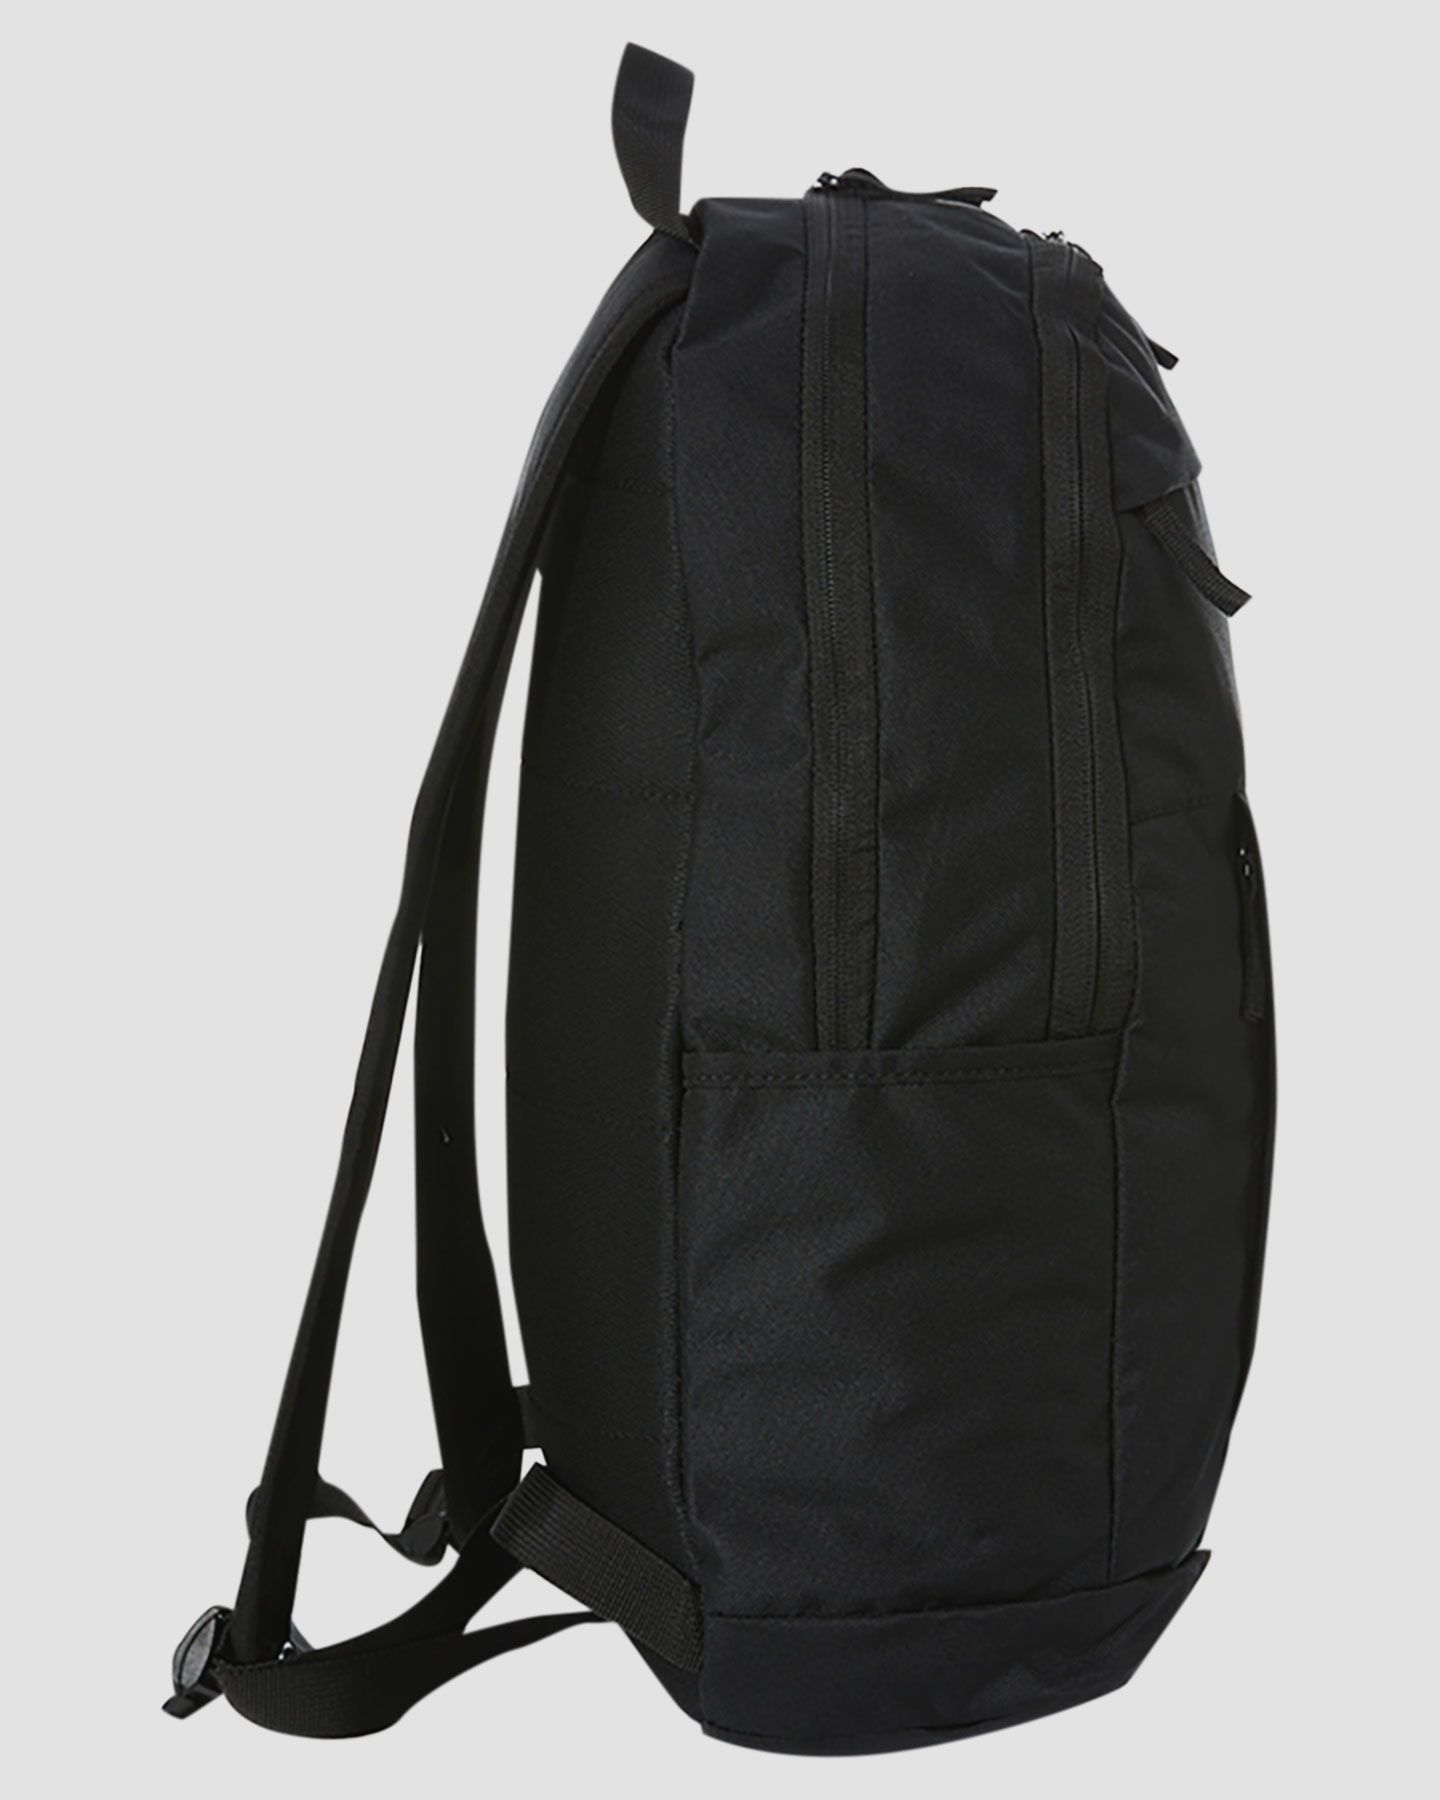 Nike Elemental Backpack - Black White | SurfStitch